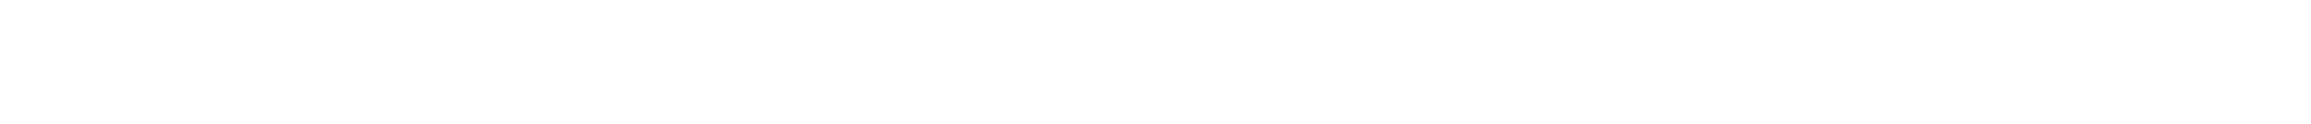 The World University Ranking